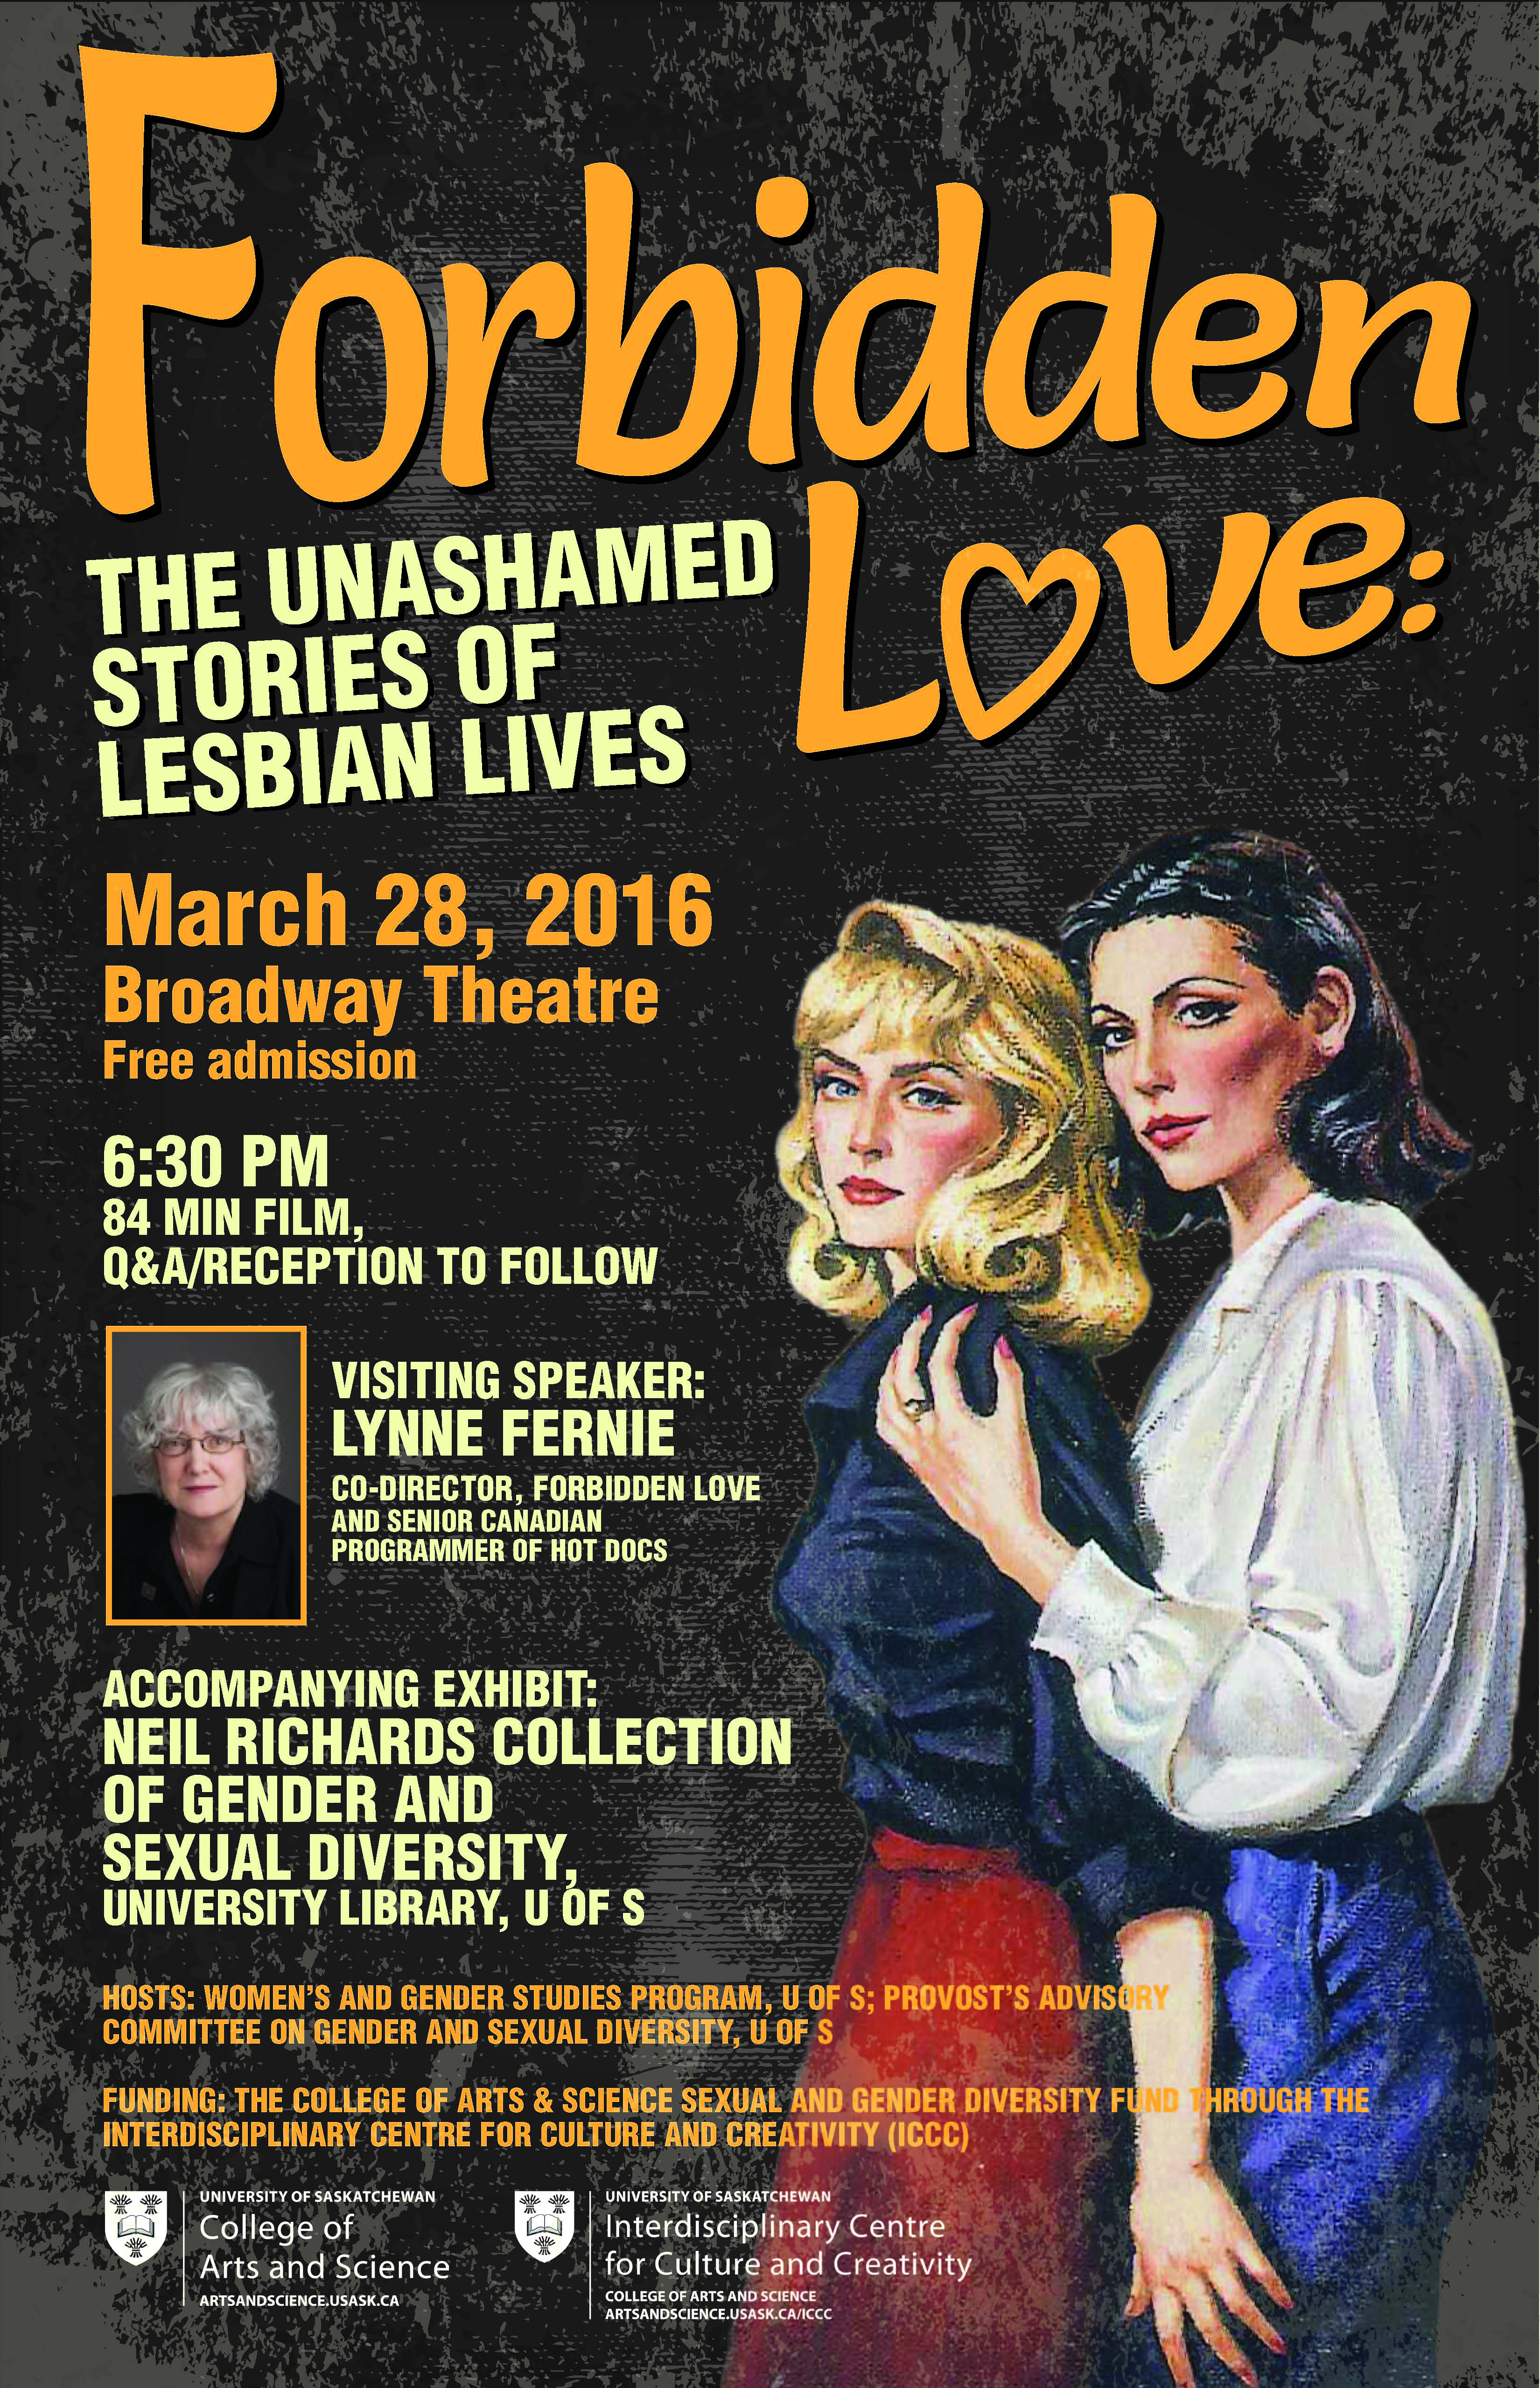 Film Forbidden Love The Unashamed Stories Of Lesbian Lives College